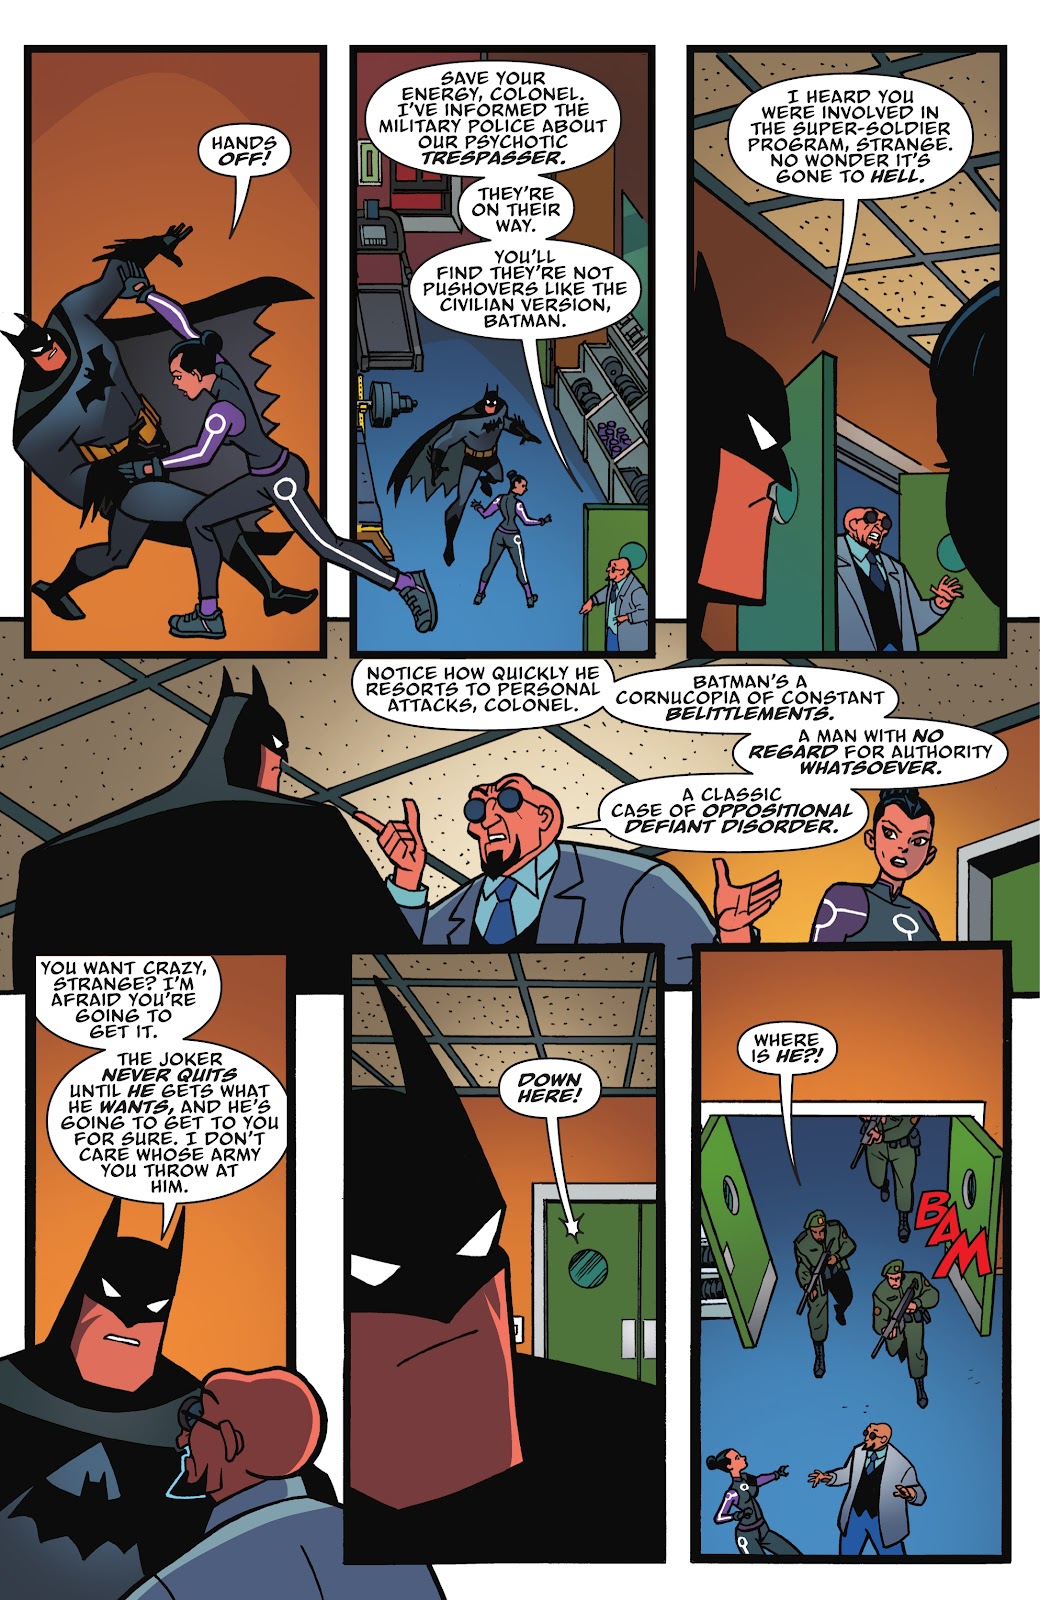 Batman: The Adventures Continue Season Three issue 4 - Page 14